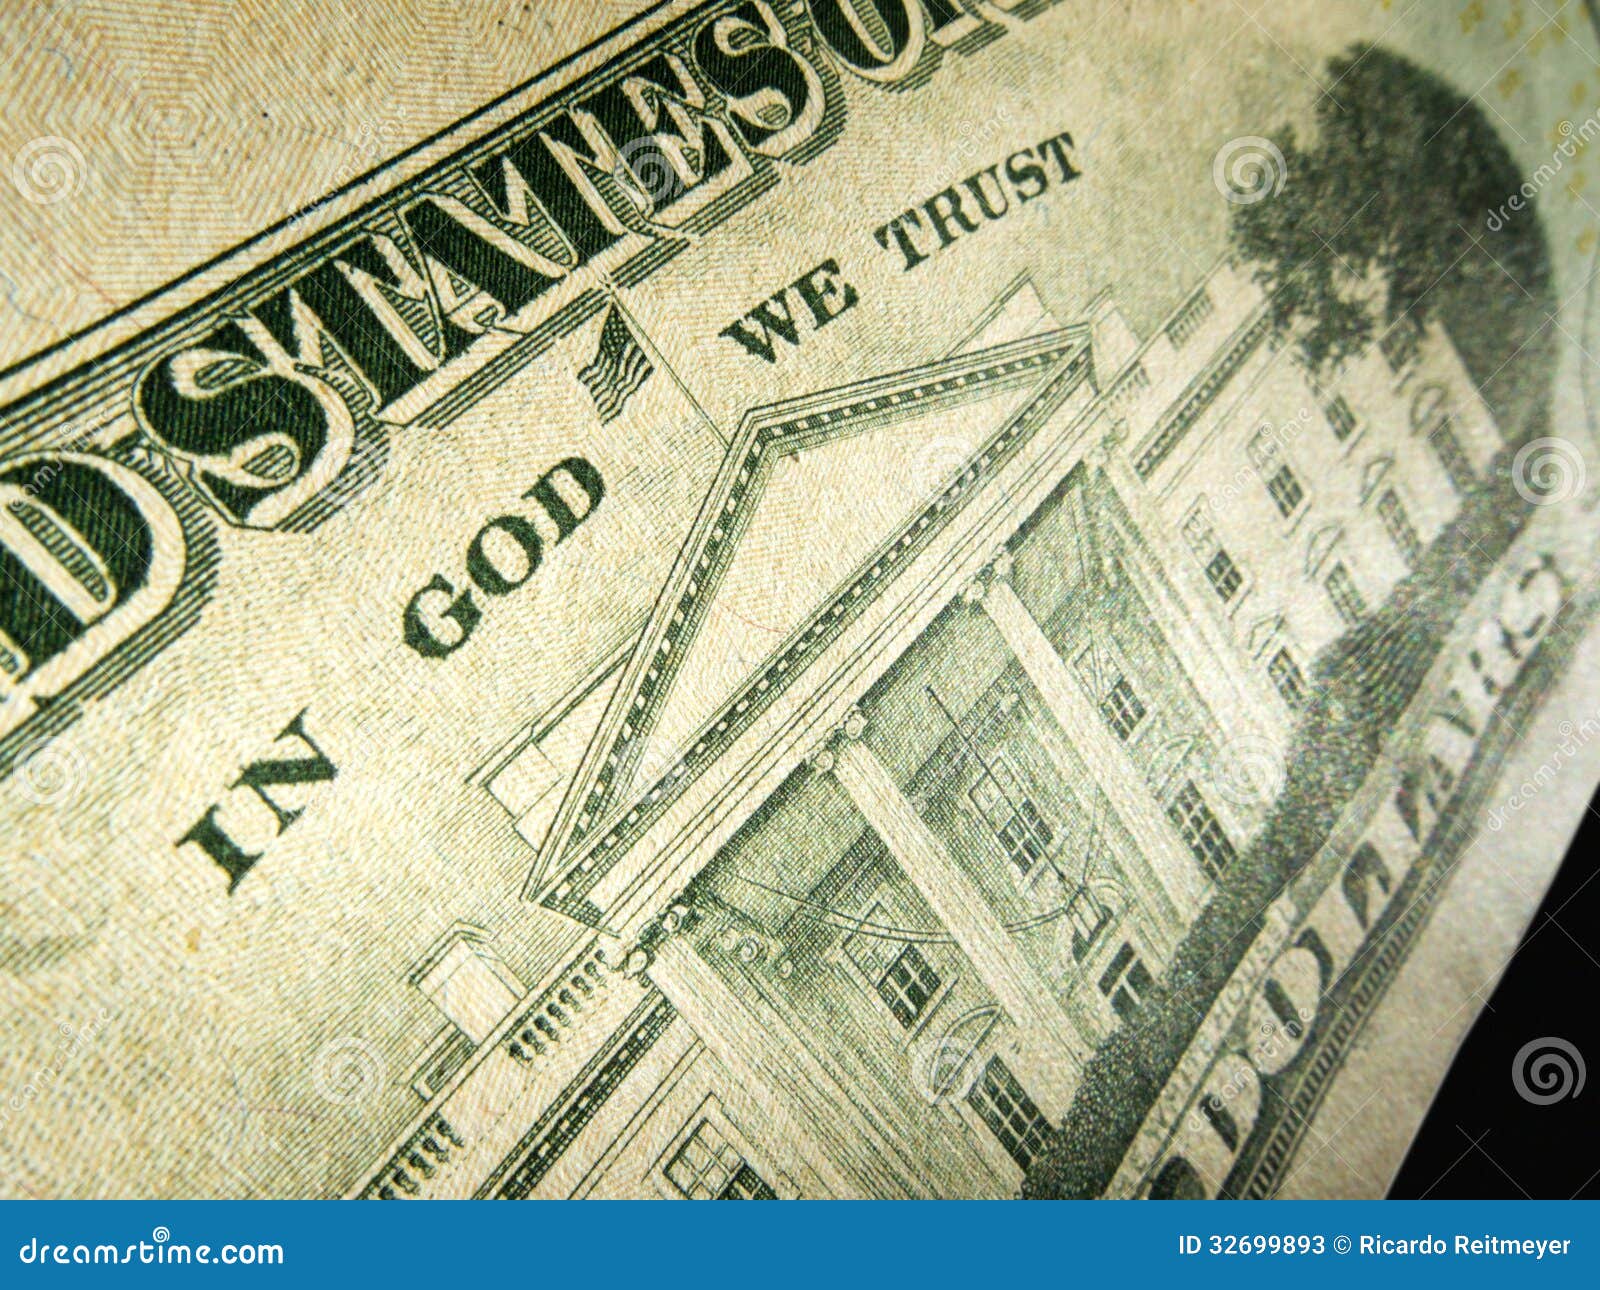 Dollars out on top on god. Доллар Бог. Изображение доллара. Надпись на долларе in God we Trust. Американская валюта надпись in God we Trust.